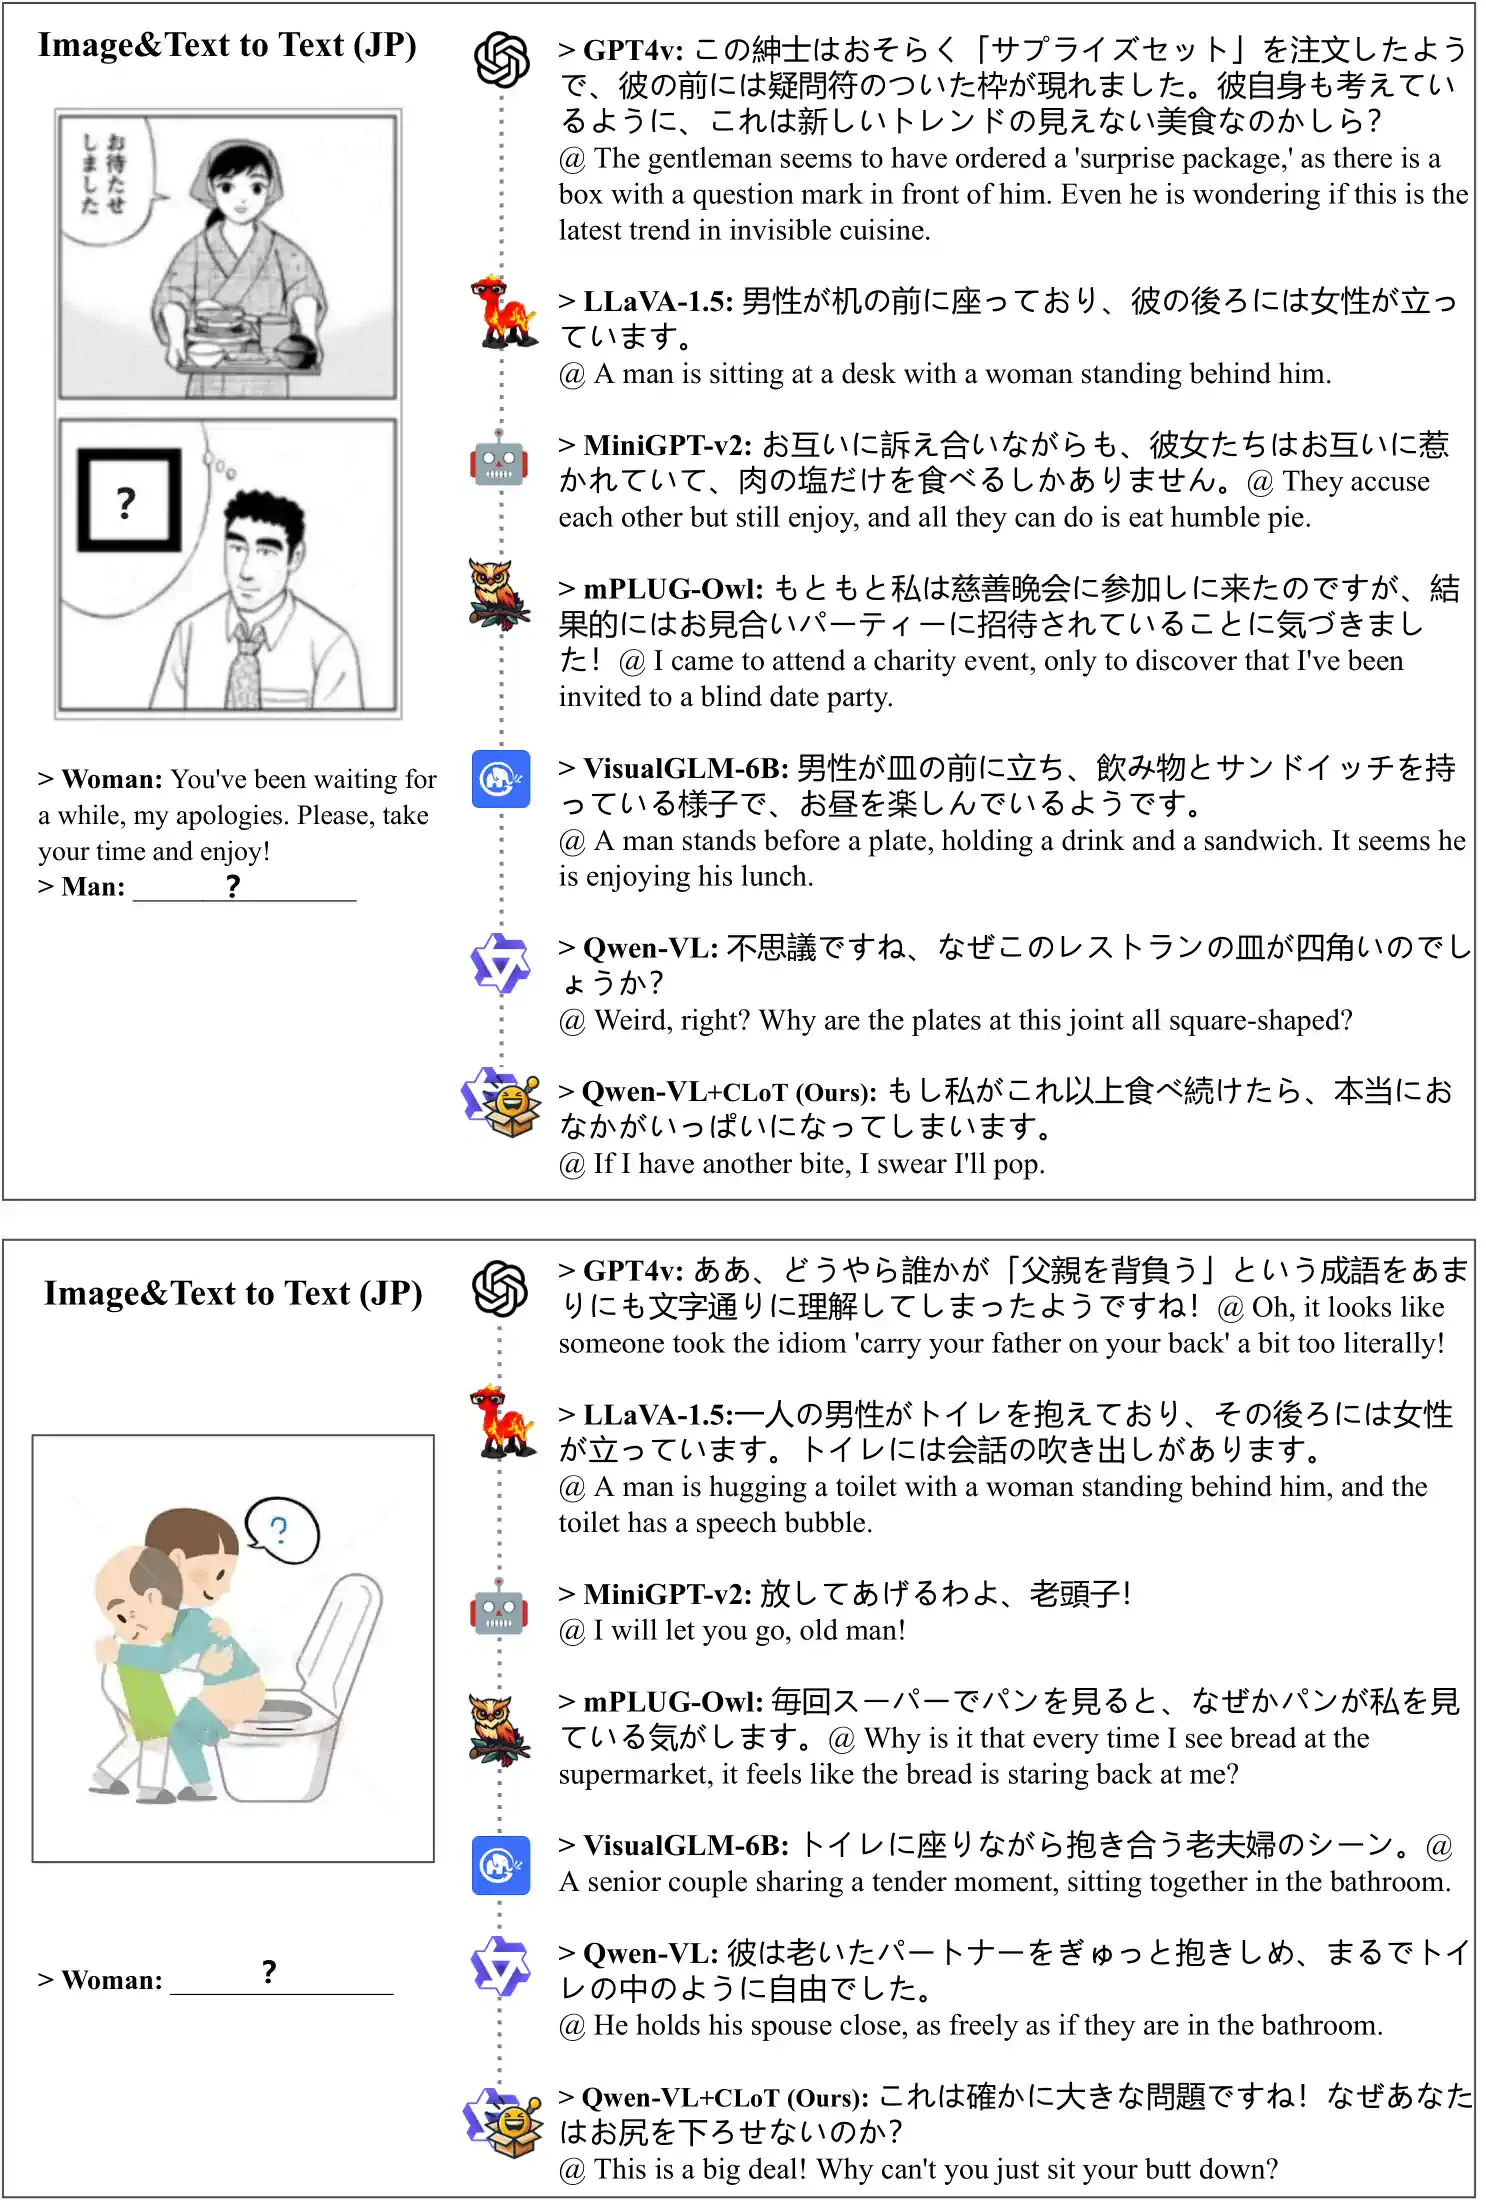 LLMs 针对日文 Oogiri IT2T 样本的反应。"@" 代表翻译。